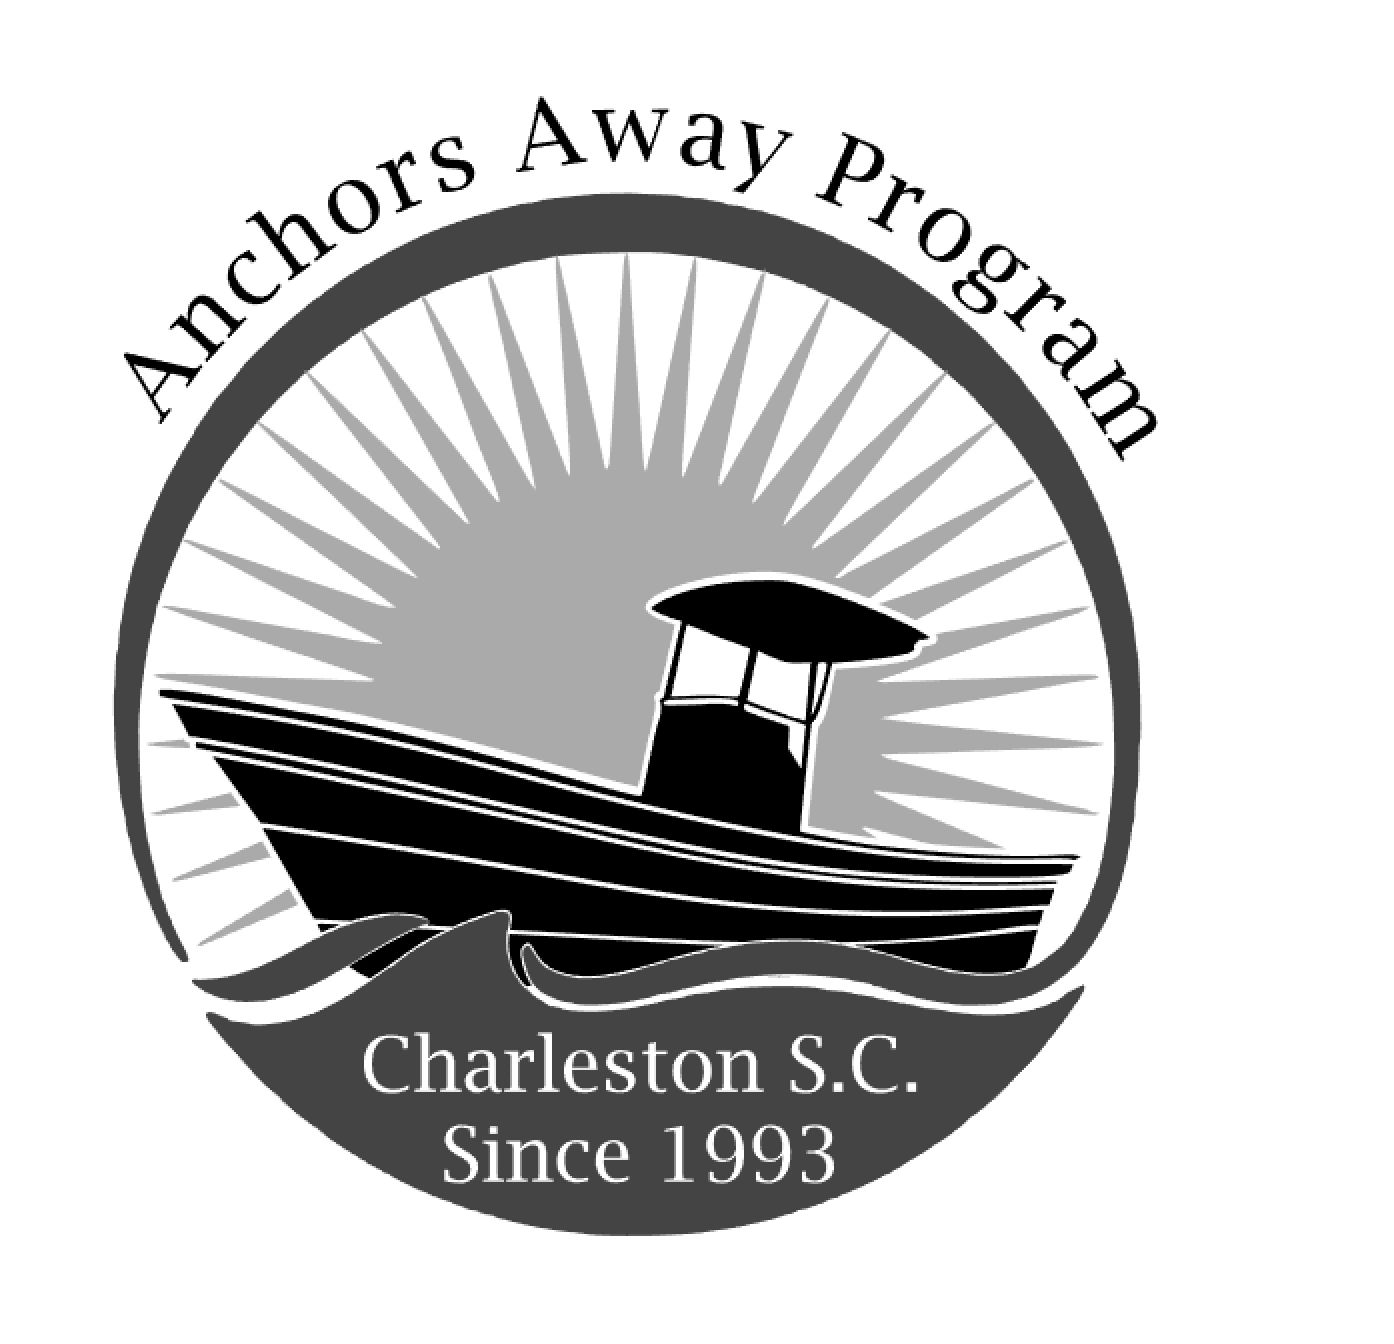 Anchors Away Program